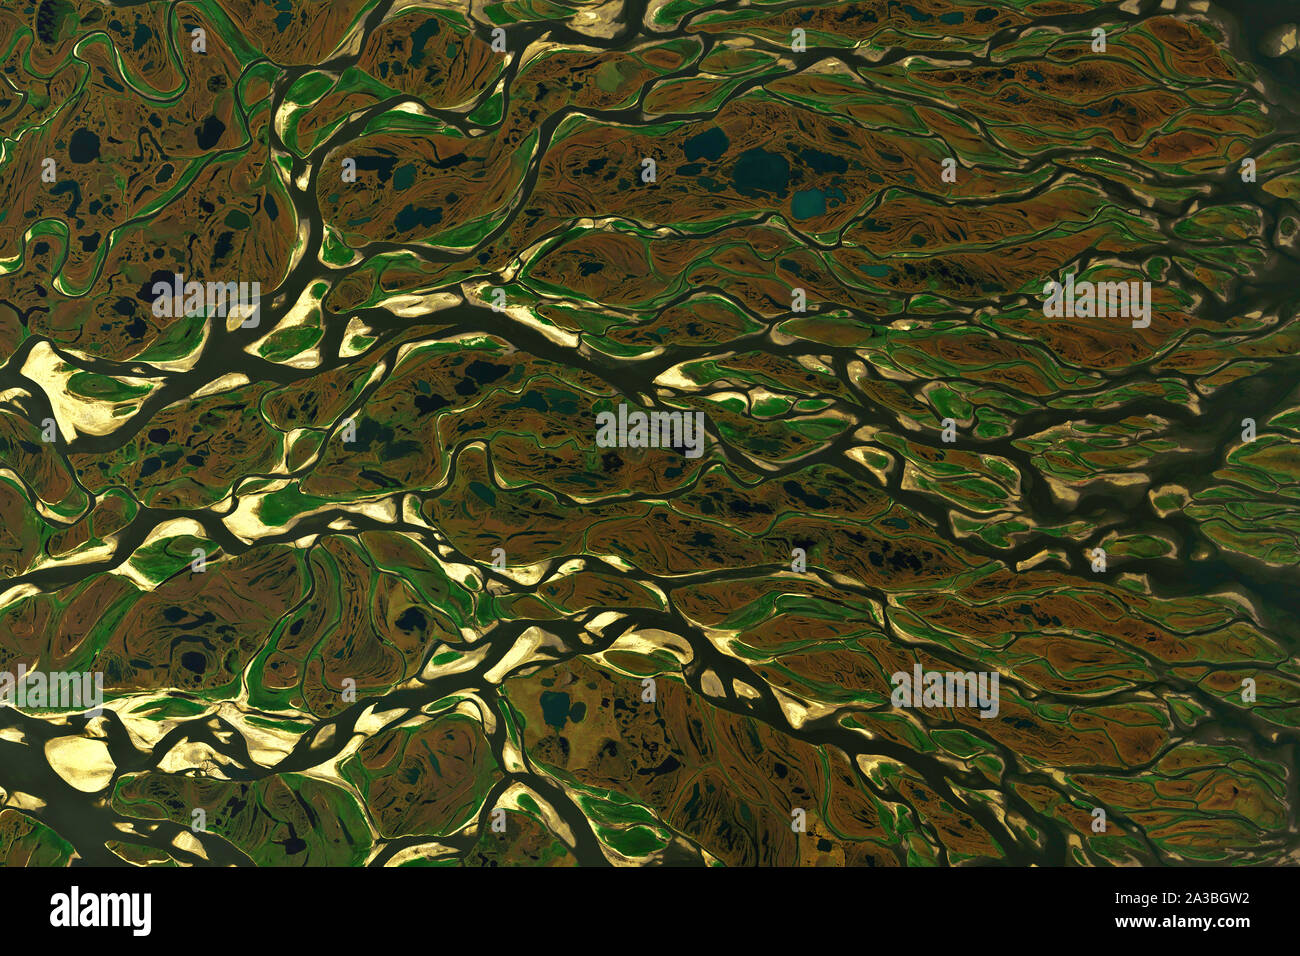 Lena river delta in Siberia, Russia seen from space - contains modified Copernicus Sentinel Data (2019) Stock Photo